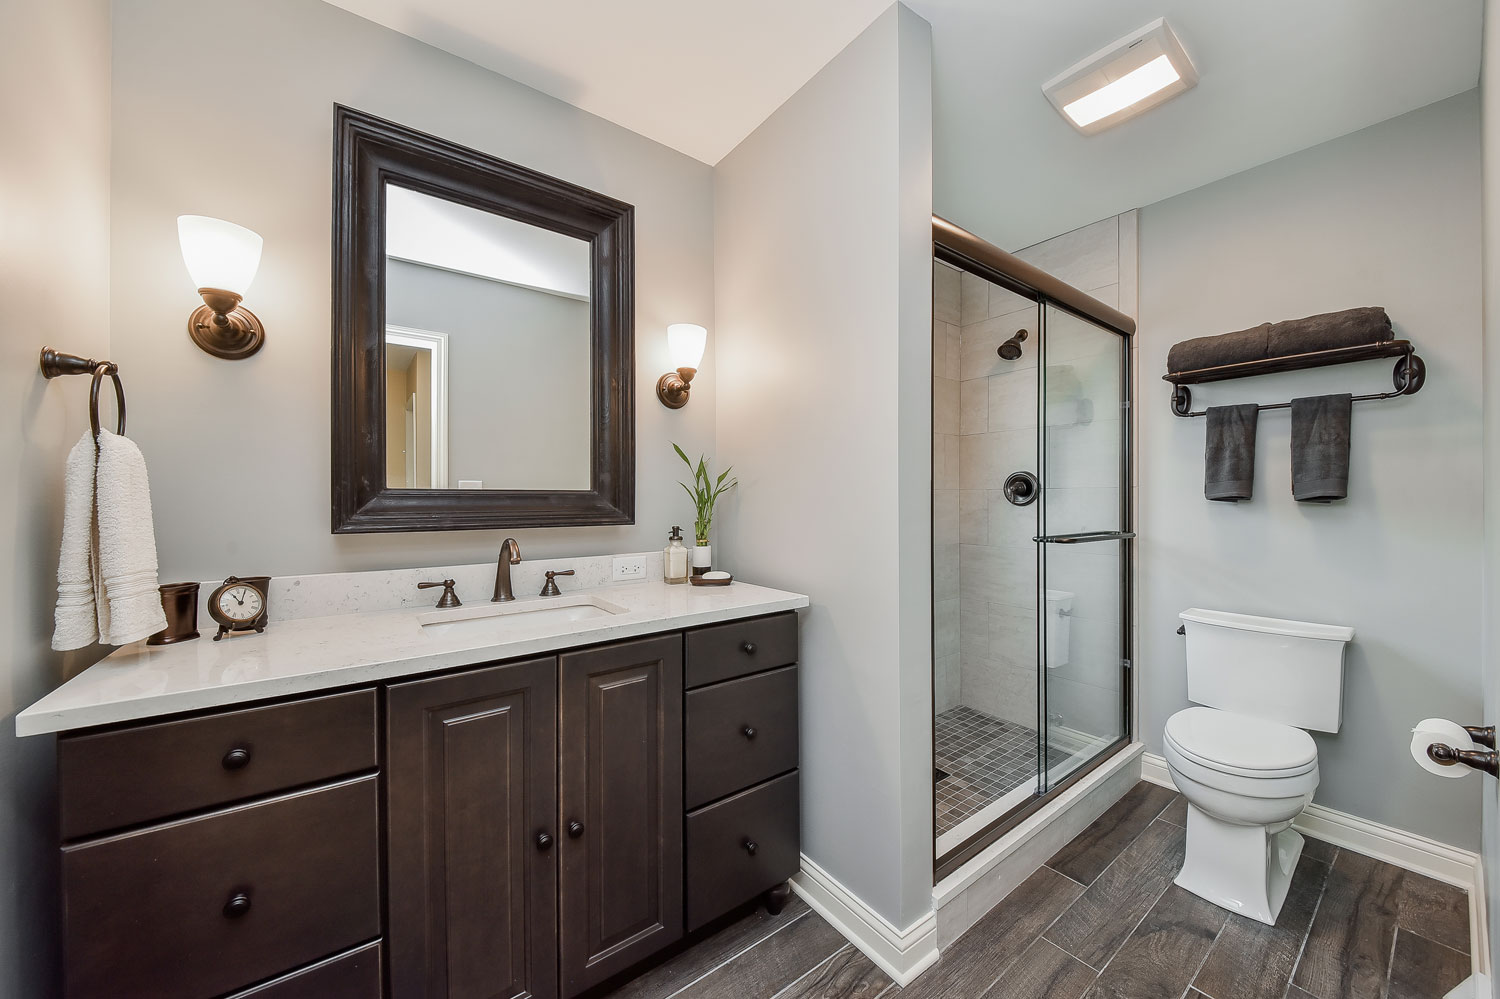 Wheaton Bathroom Remodel Rustic Wood Look Tile - Sebring Design Build